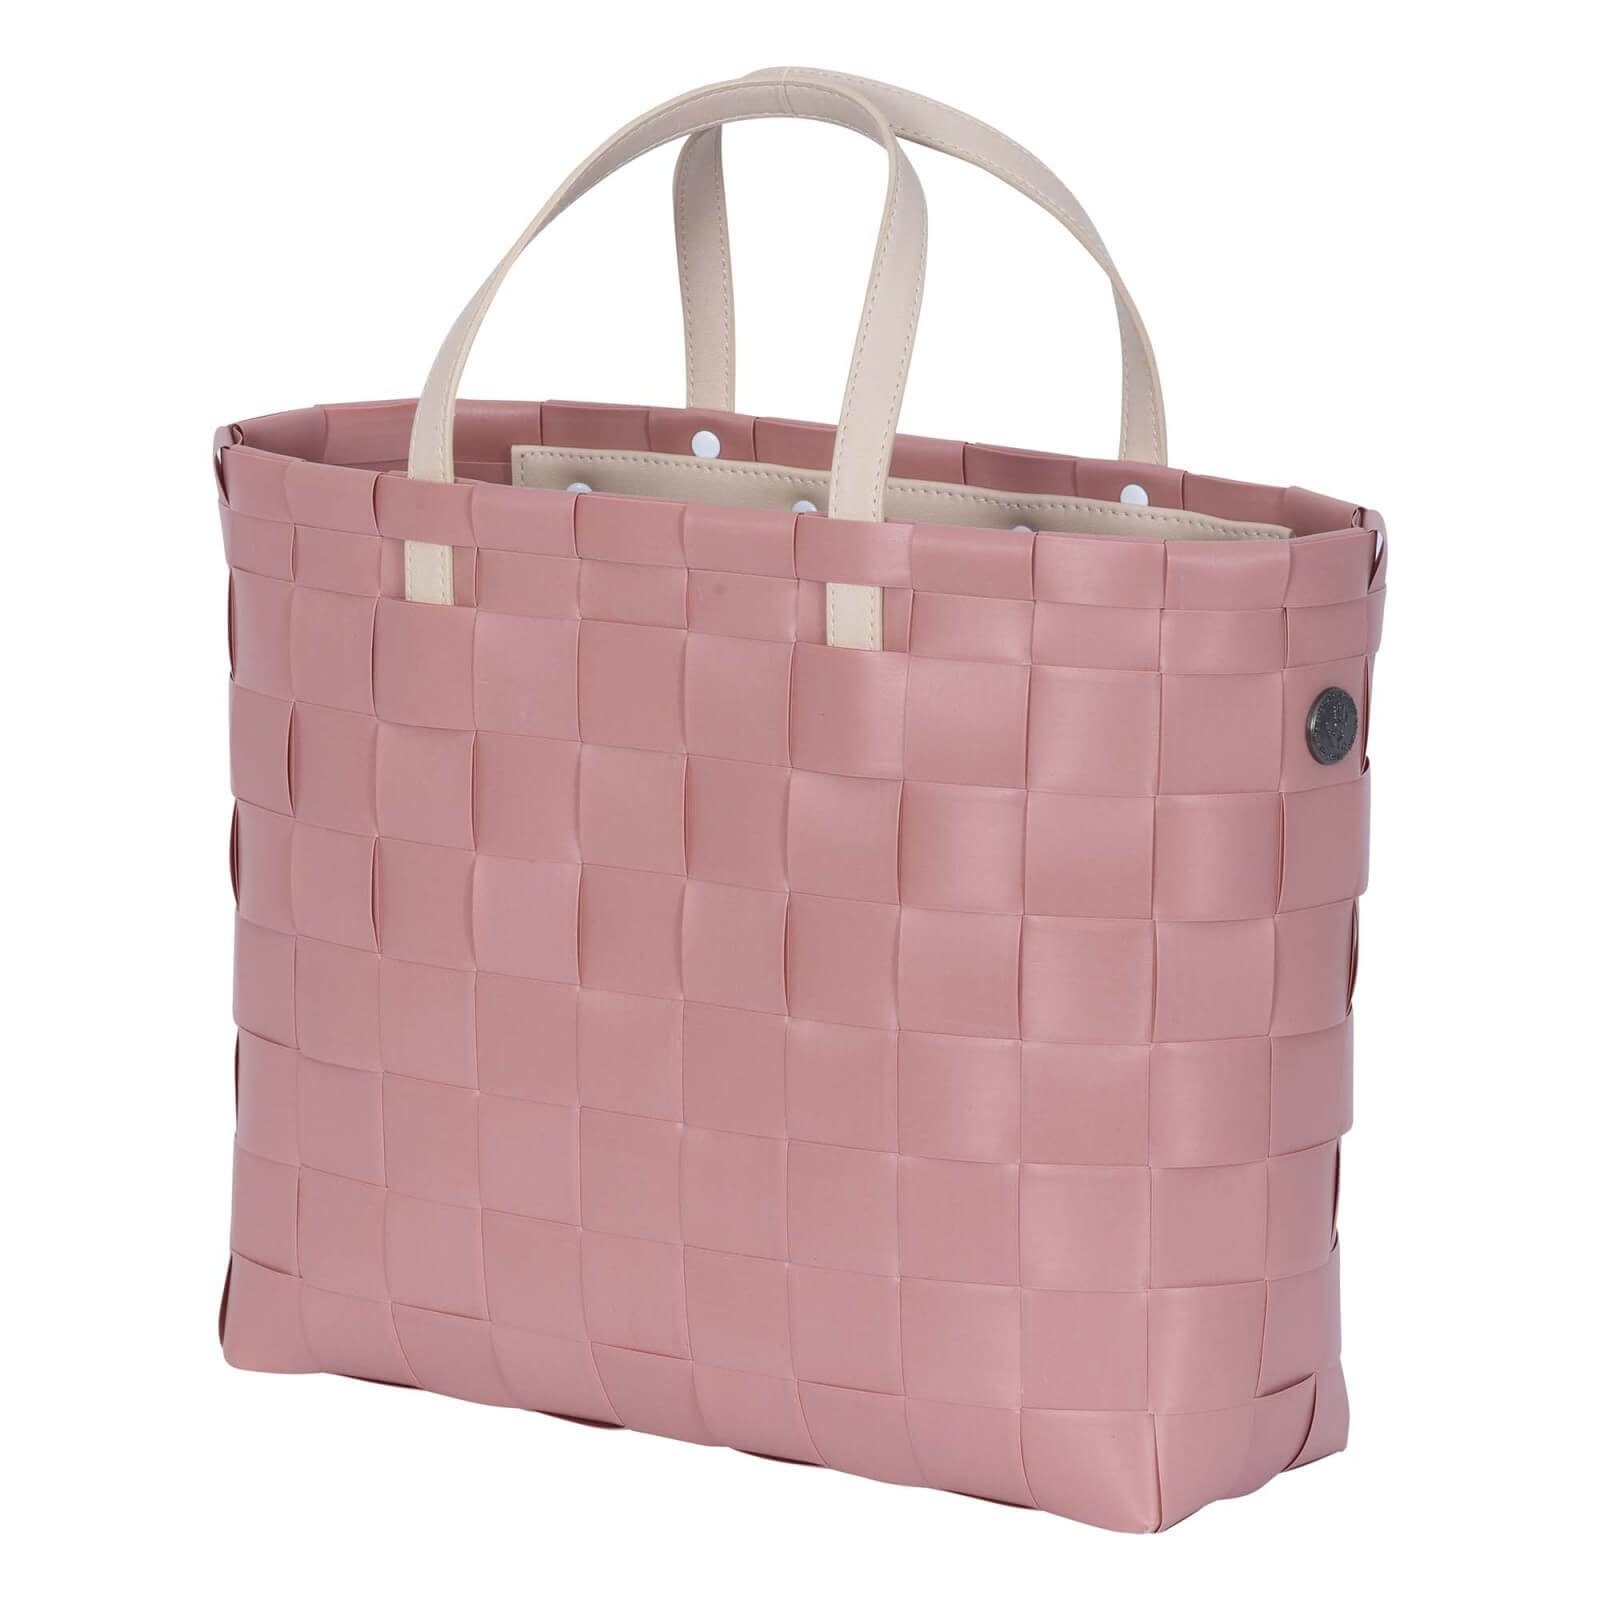 TERRA Öko Einkaufsshopper Bag Hand PINK BY Petite rosa Schulter Korb Shopper By HANDED Tasche Handed